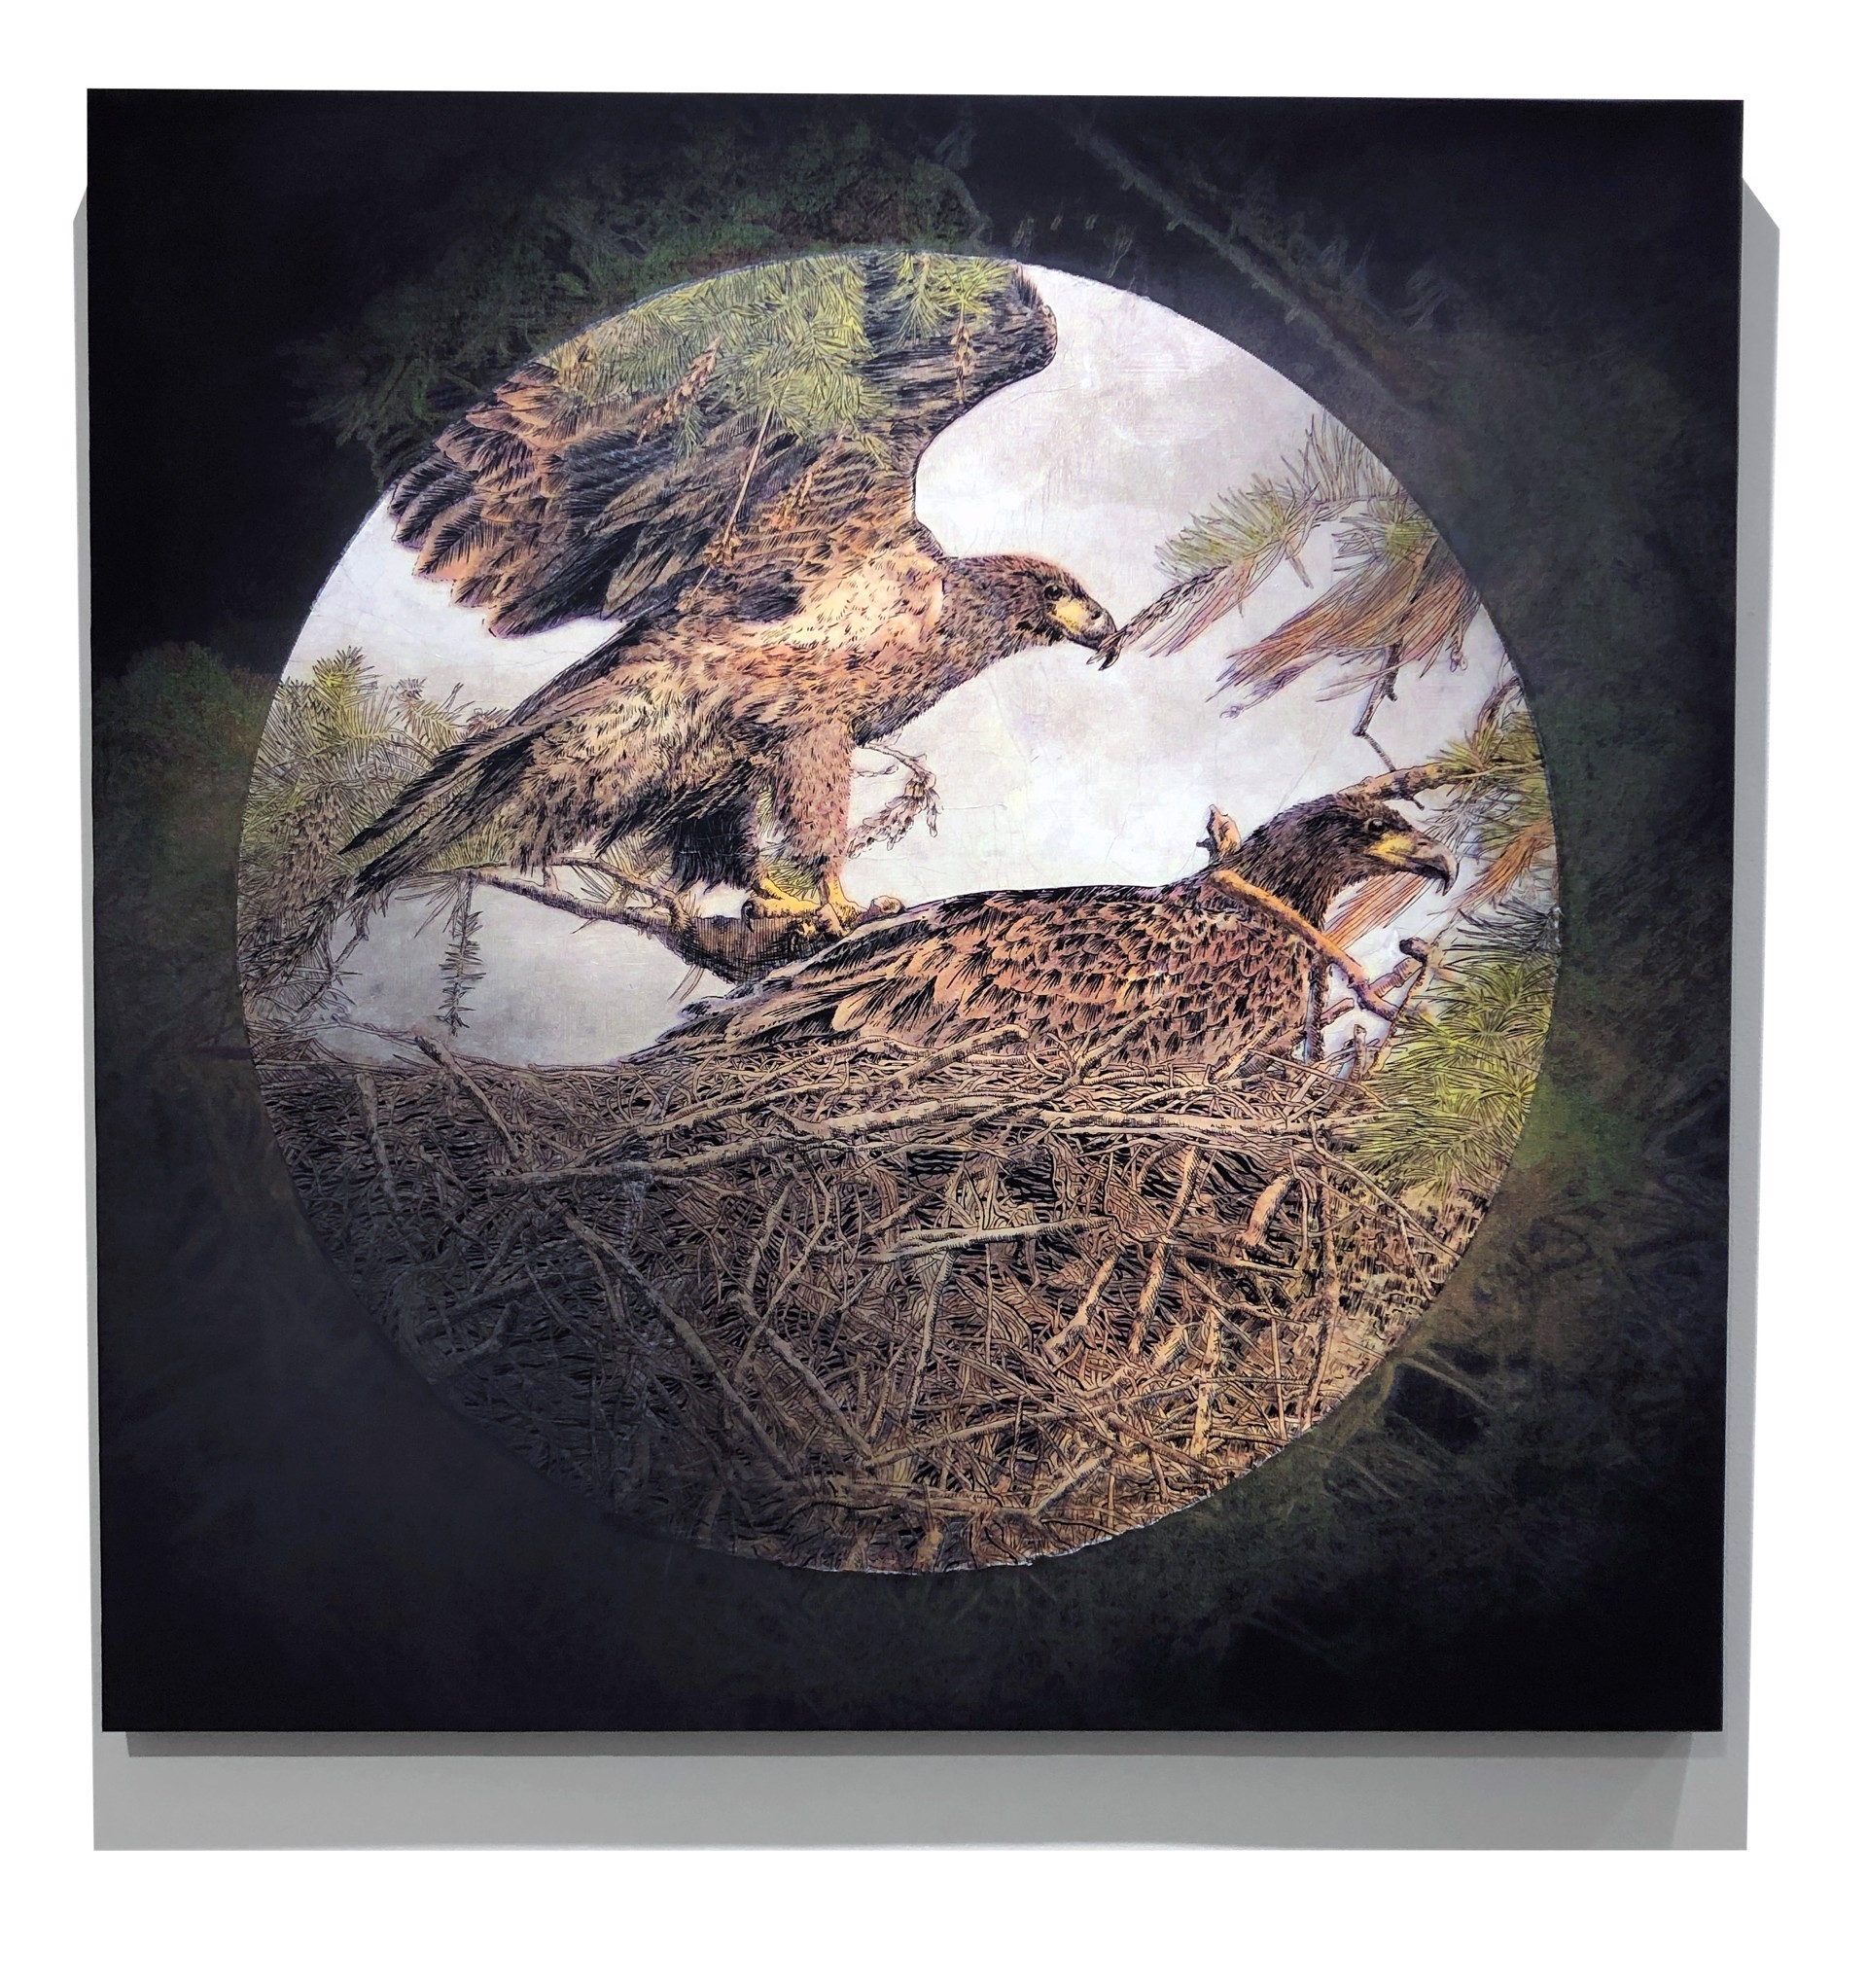 Juvenile Eagles by Pippin Frisbie-Calder